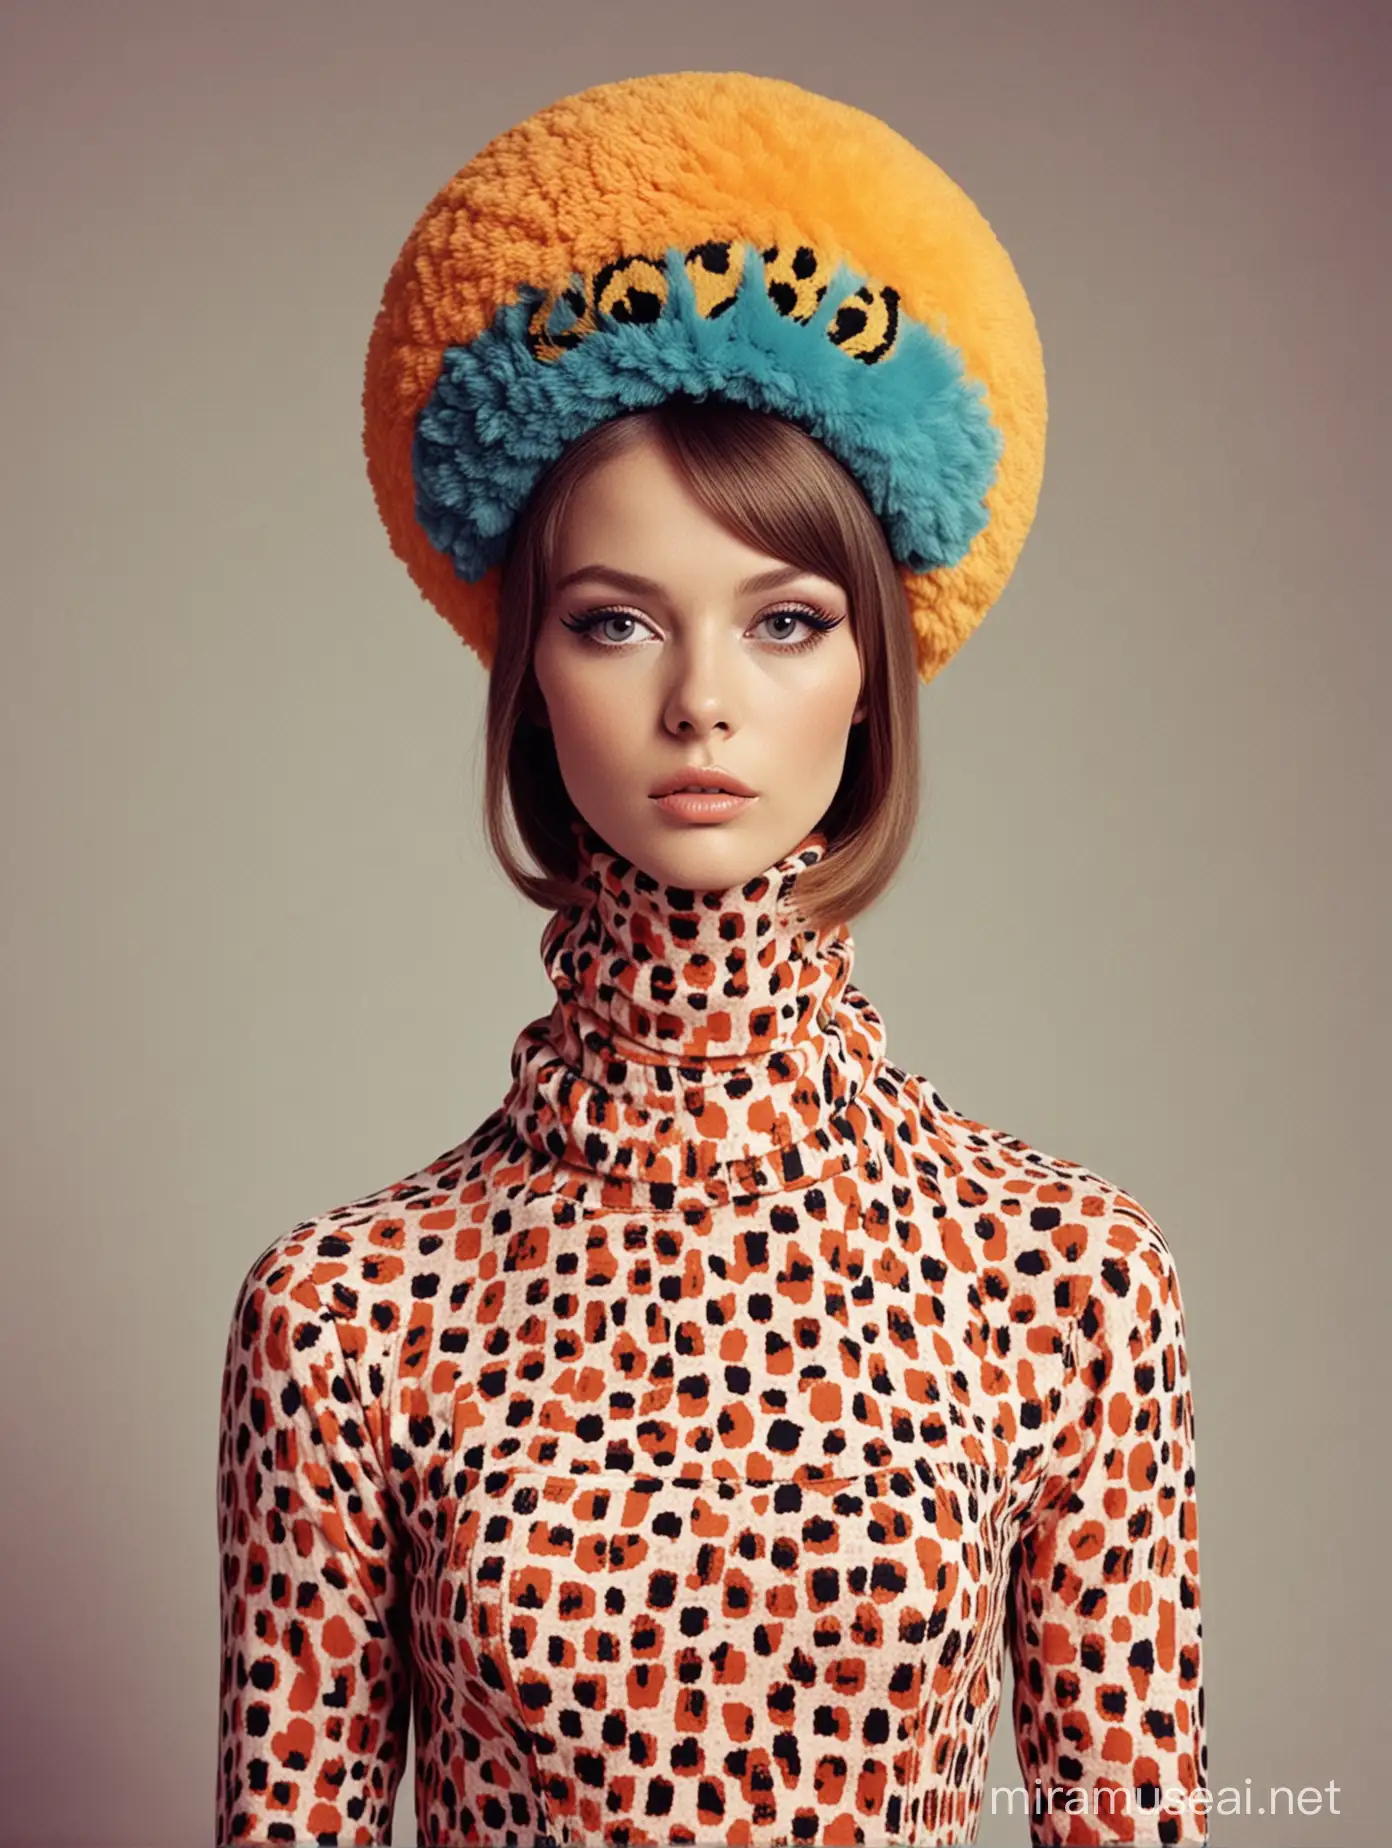 60's era fashion model, strange nonsensical material, animal, describe colors, face
wearable, headgear, clothing, full body fashion,